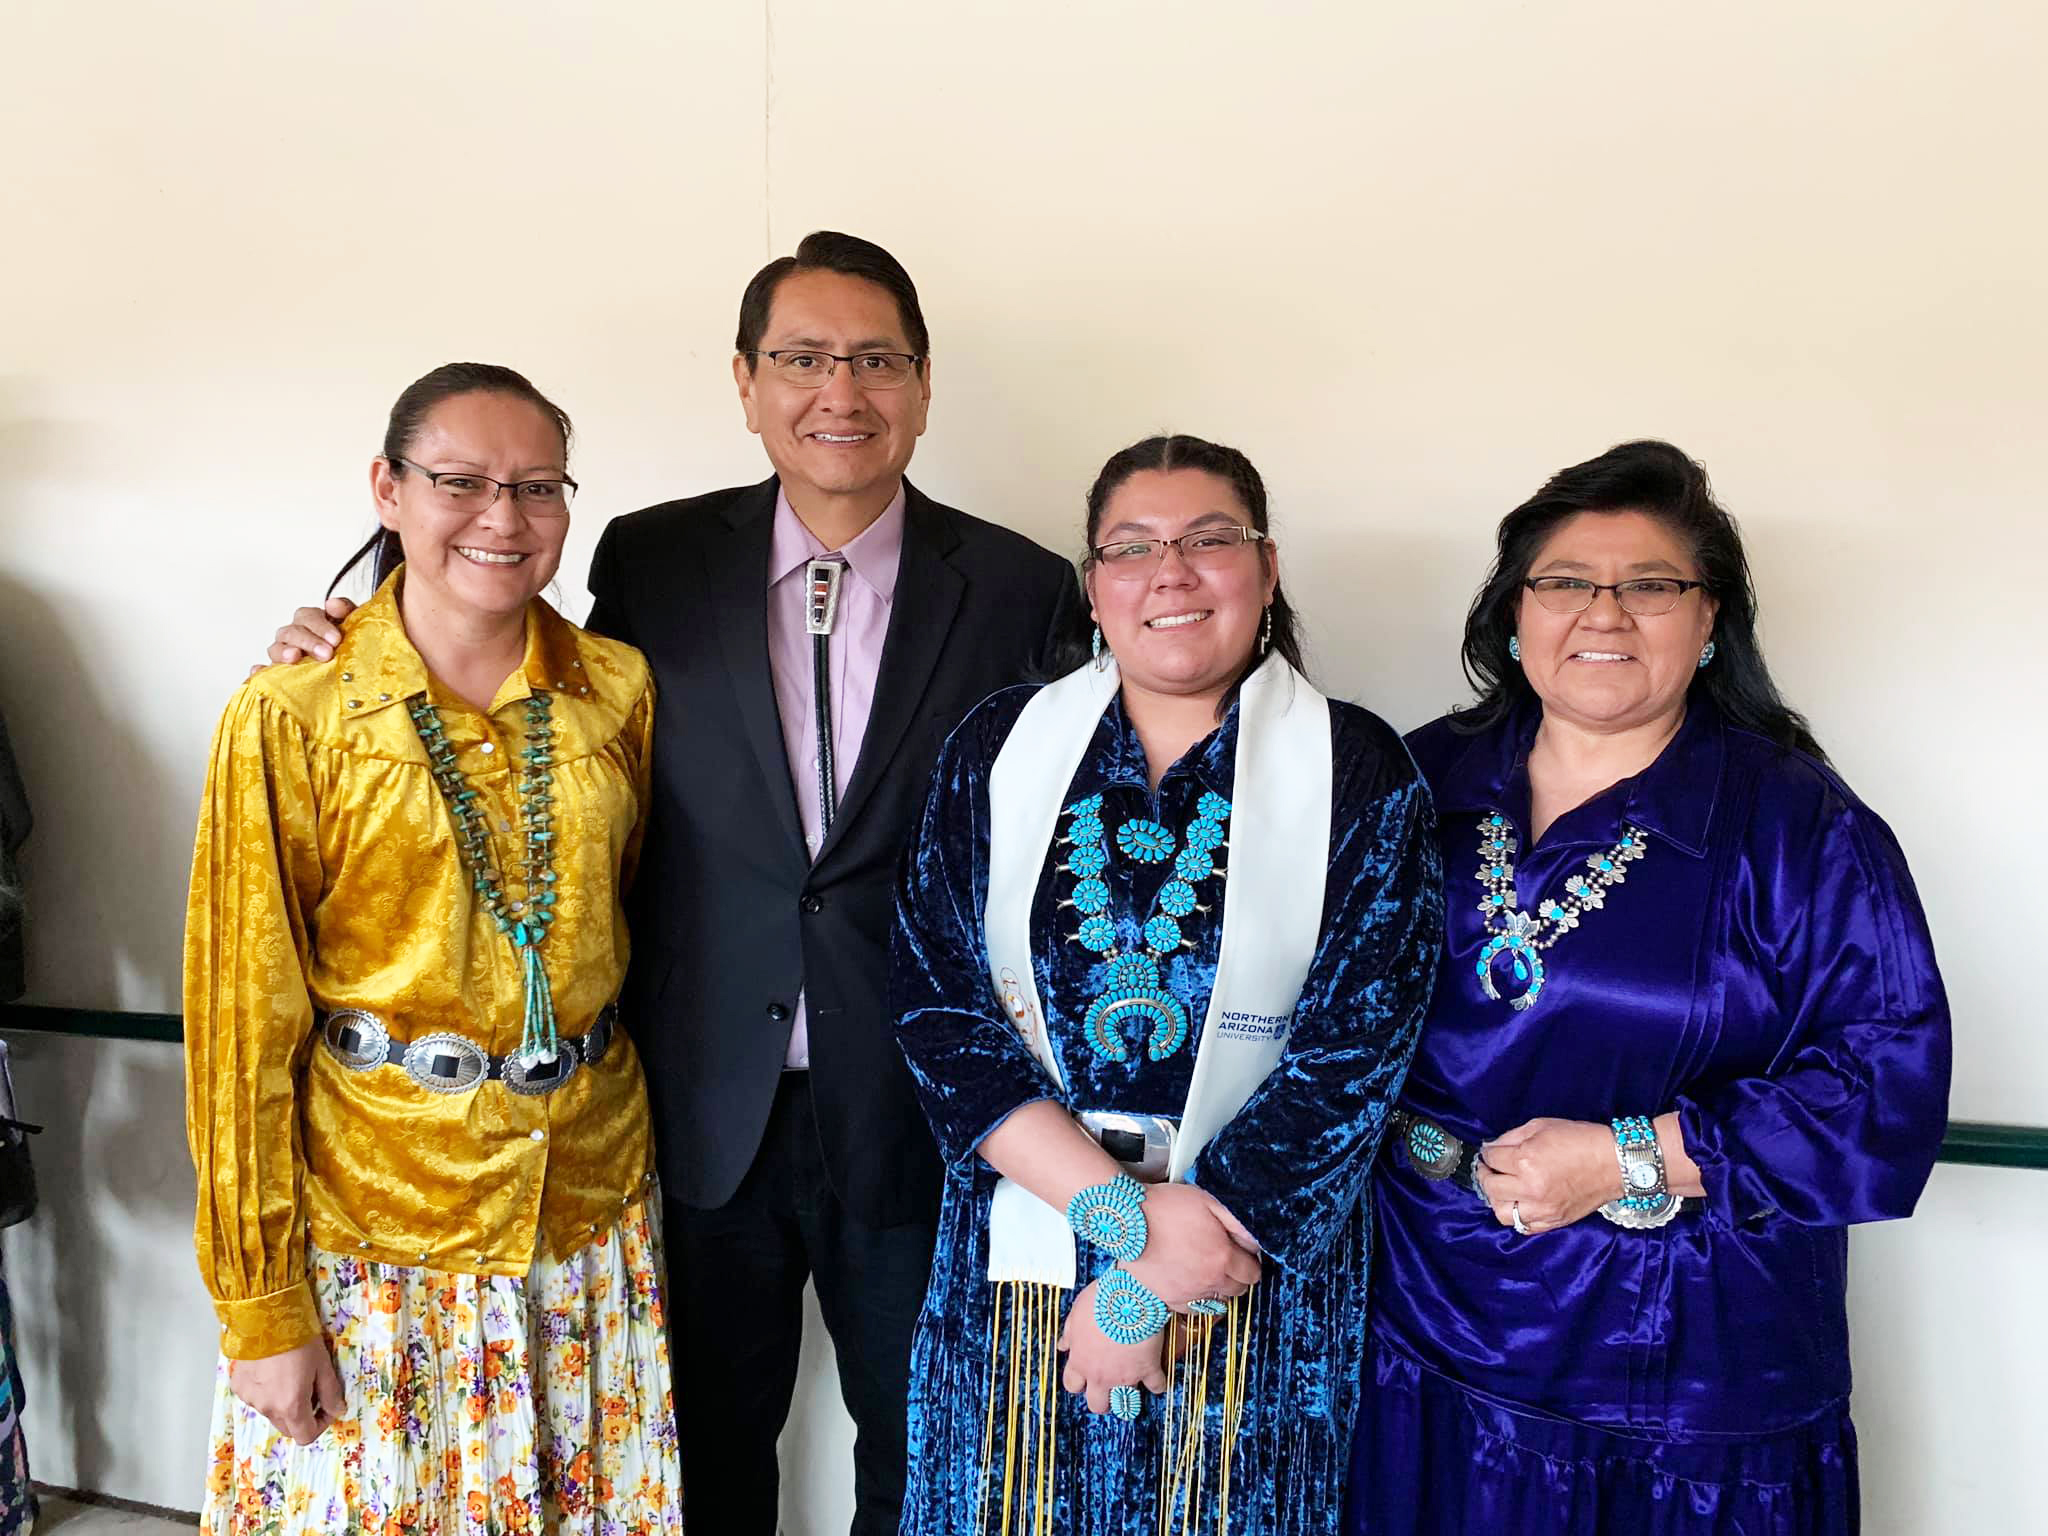 Northern Arizona University hosts annual indigenous convocation